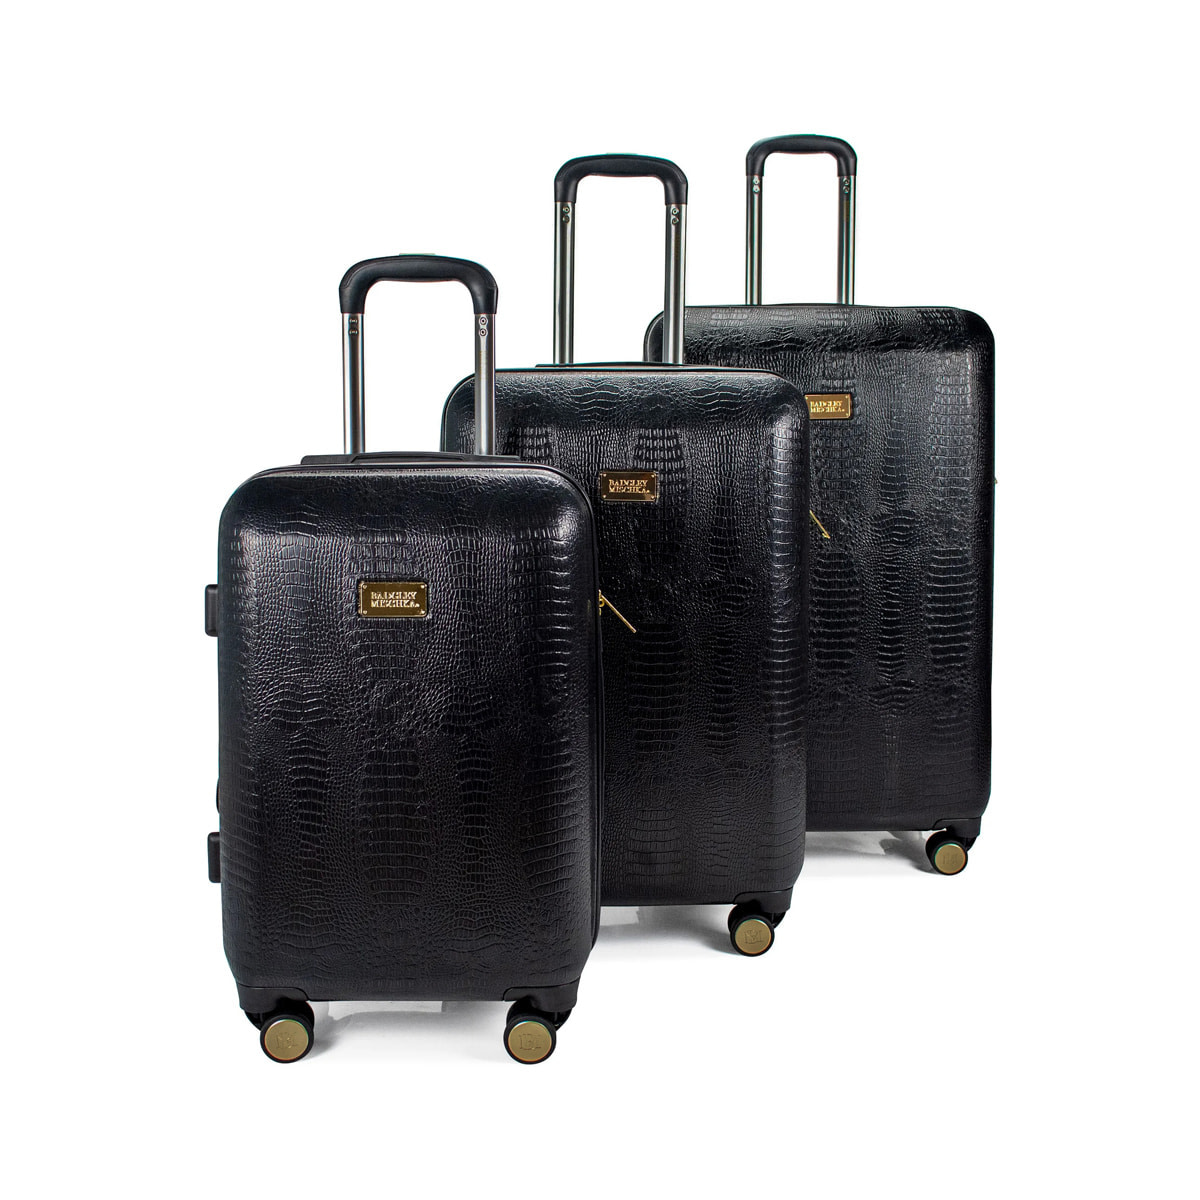 19v69 italia Vintage 3 Piece Expandable Retro Luggage Set (Black)